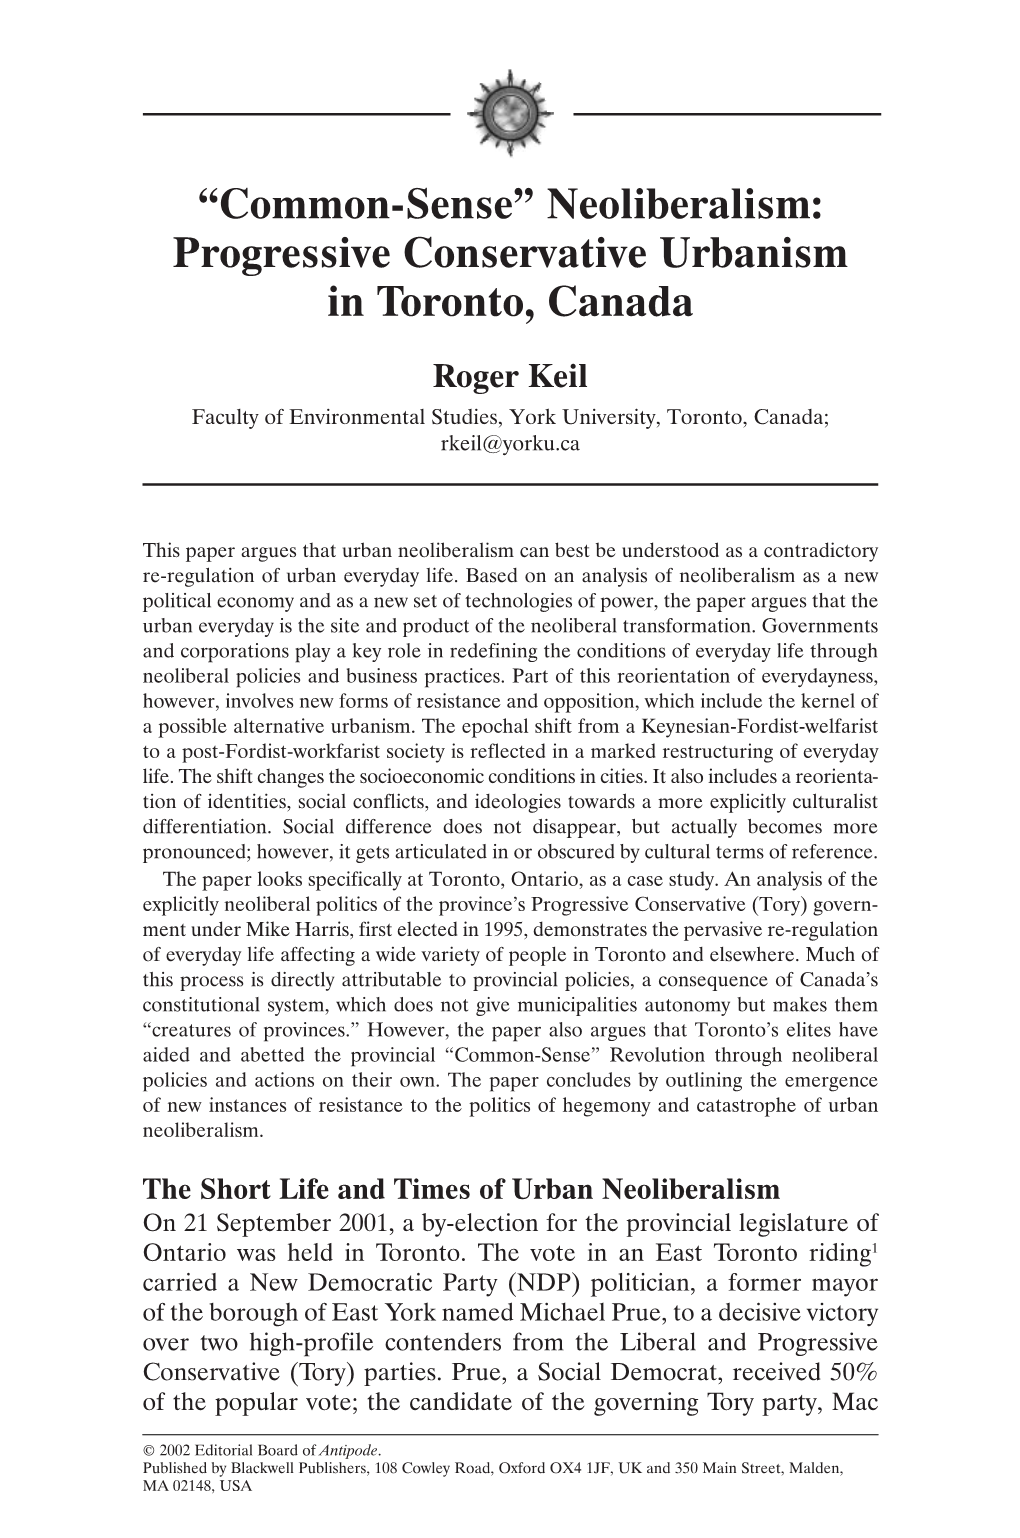 Neoliberalism: Progressive Conservative Urbanism in Toronto, Canada